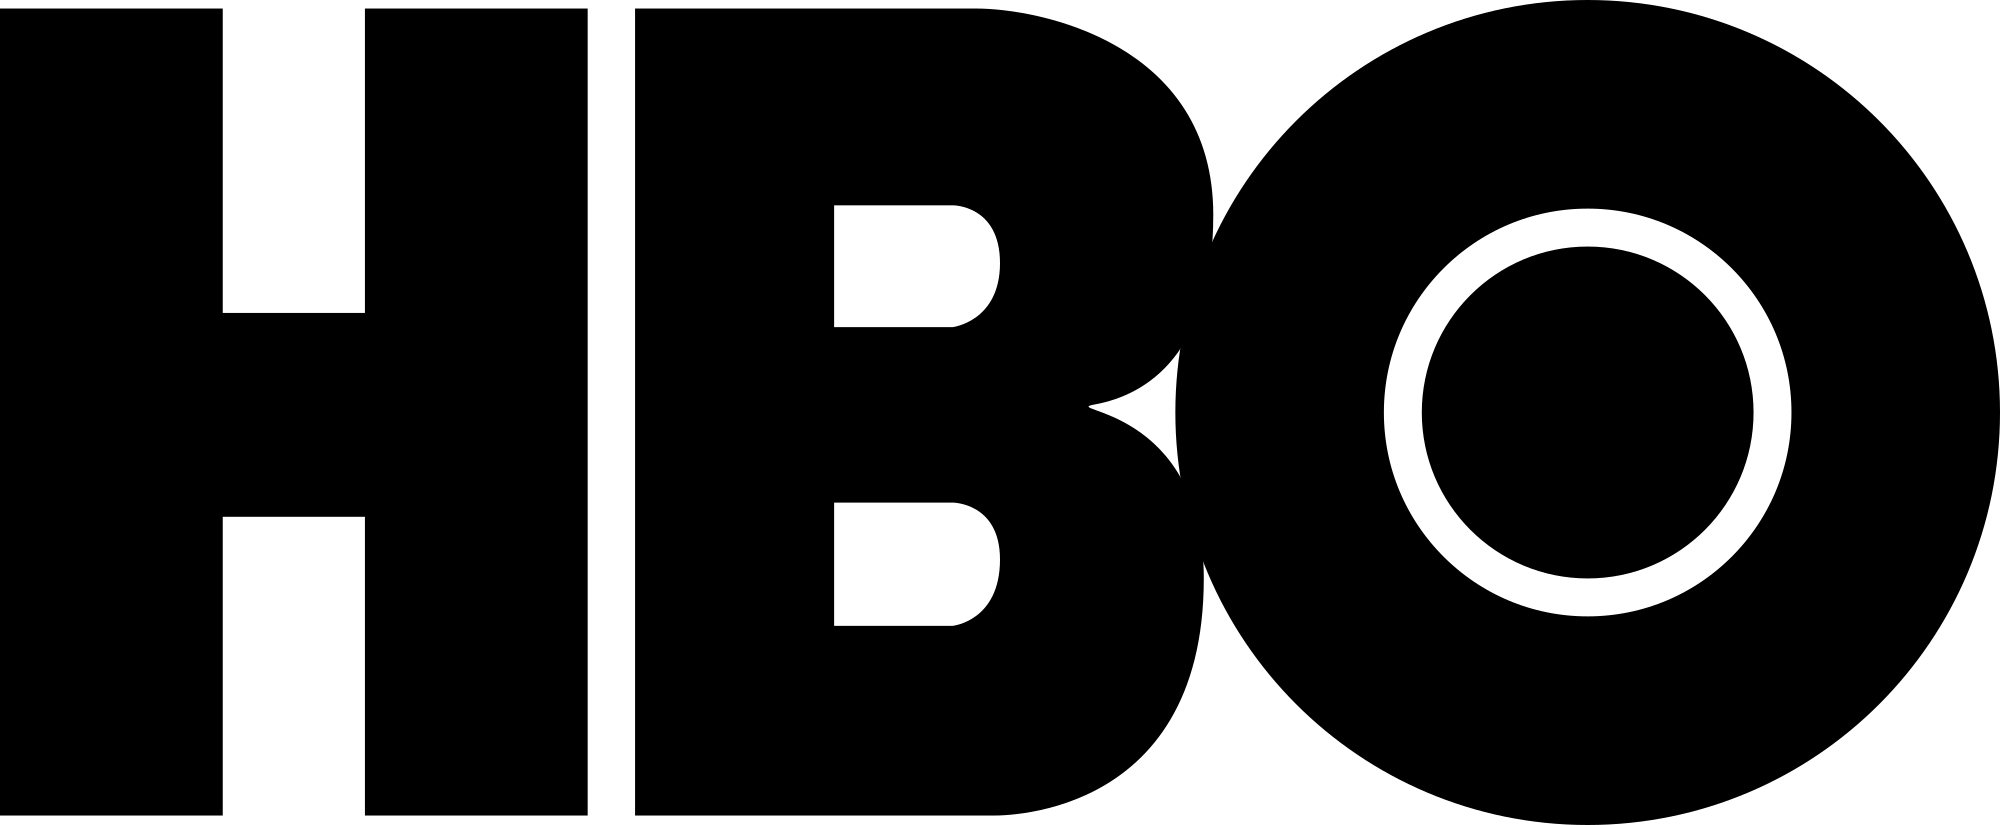 HBO Logo - File:HBO logo.svg - Wikimedia Commons